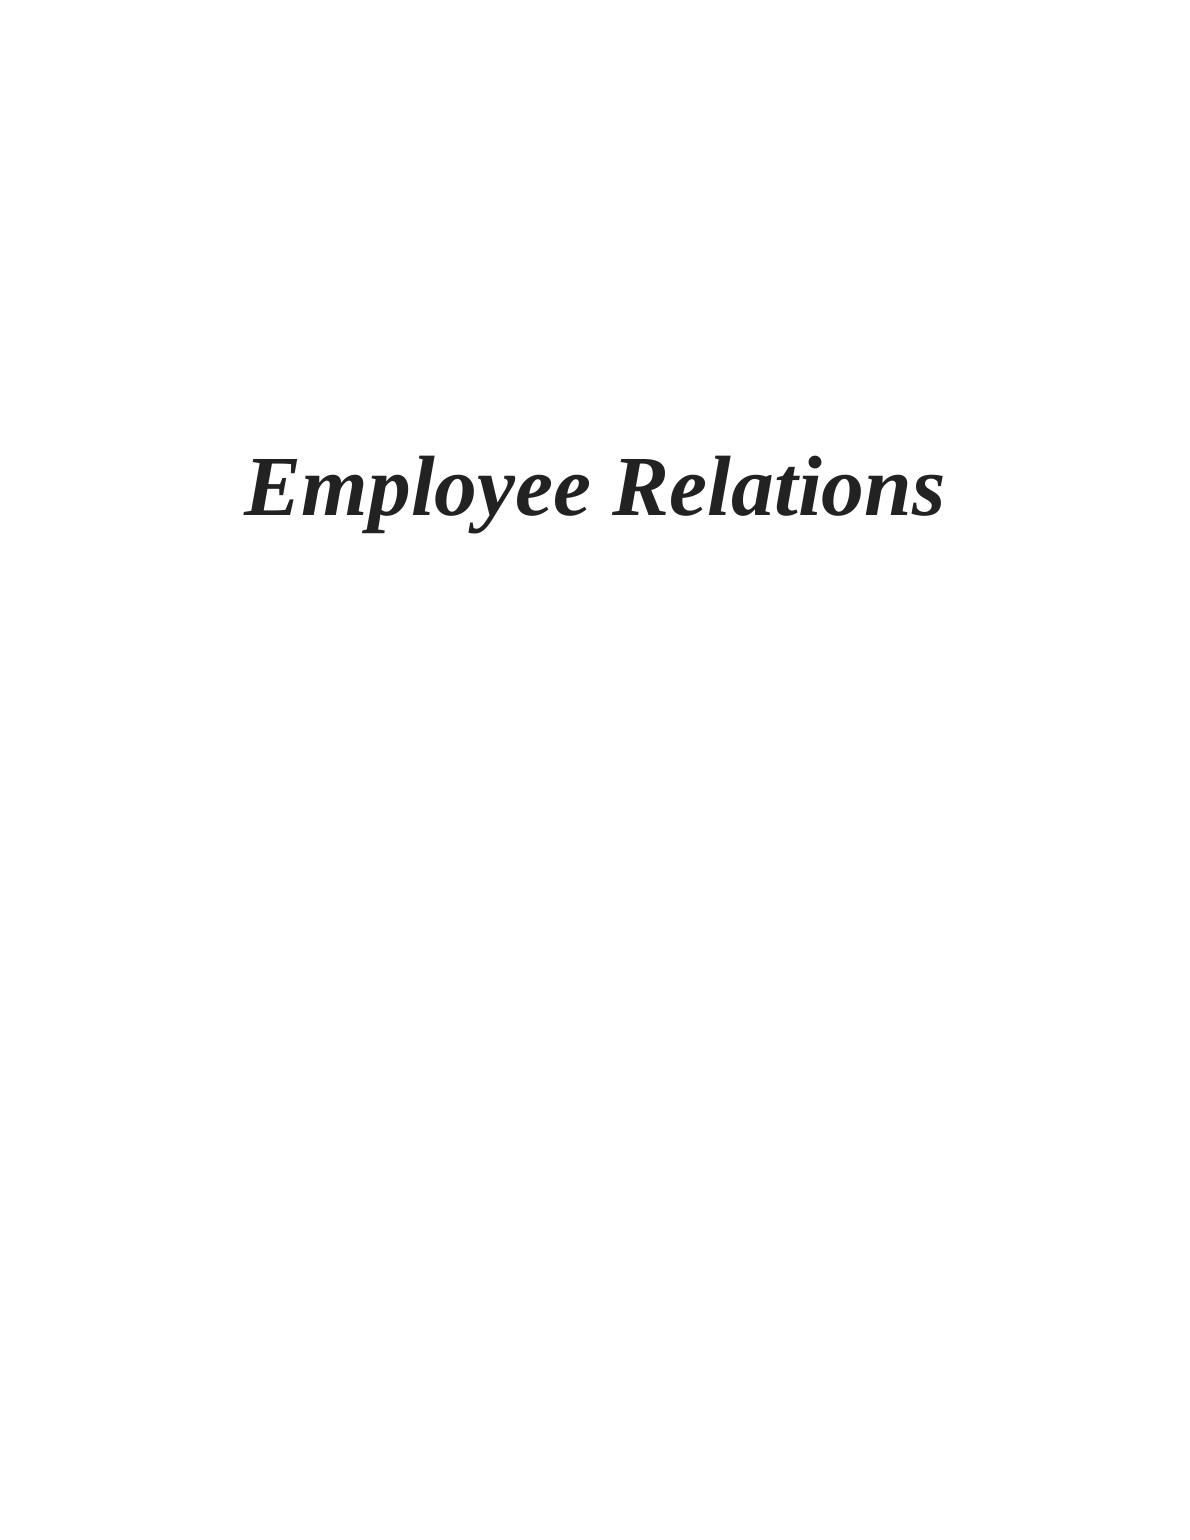 Employee Relations Assignment (Doc) - Amazon_1